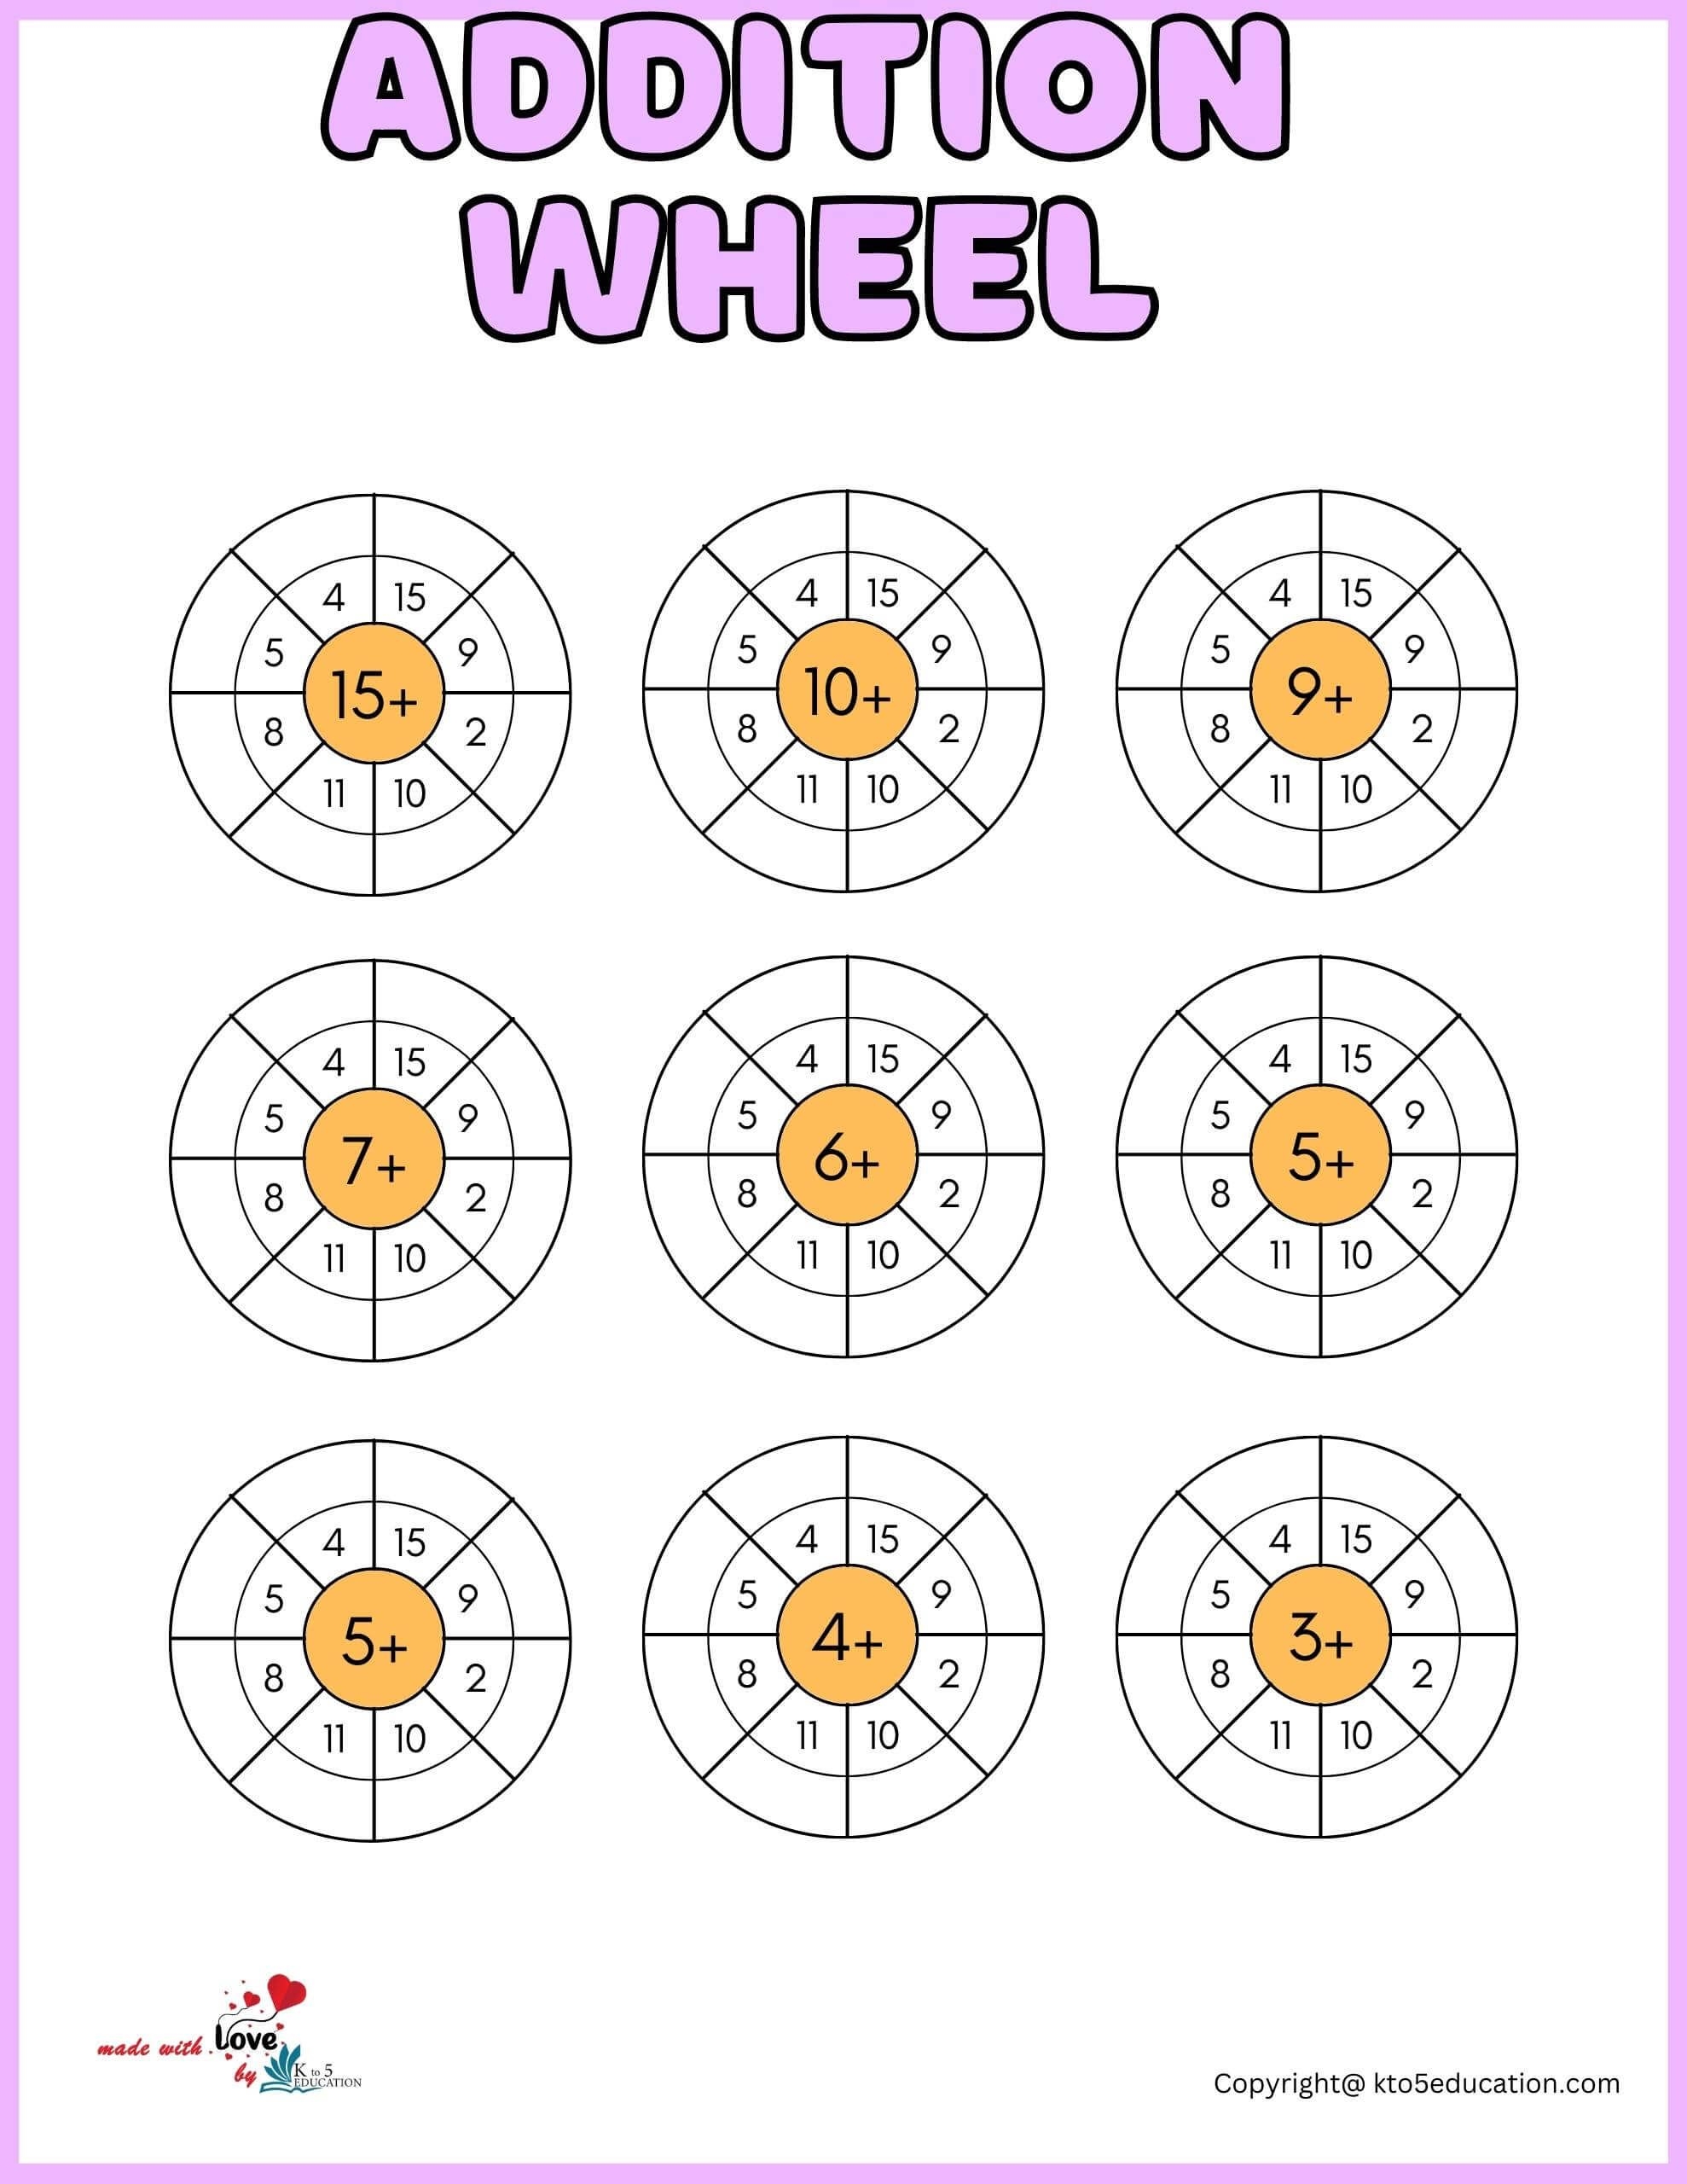 Printable Addition Wheel Worksheet For Kids FREE Download Worksheets For Kids Subtraction Worksheets